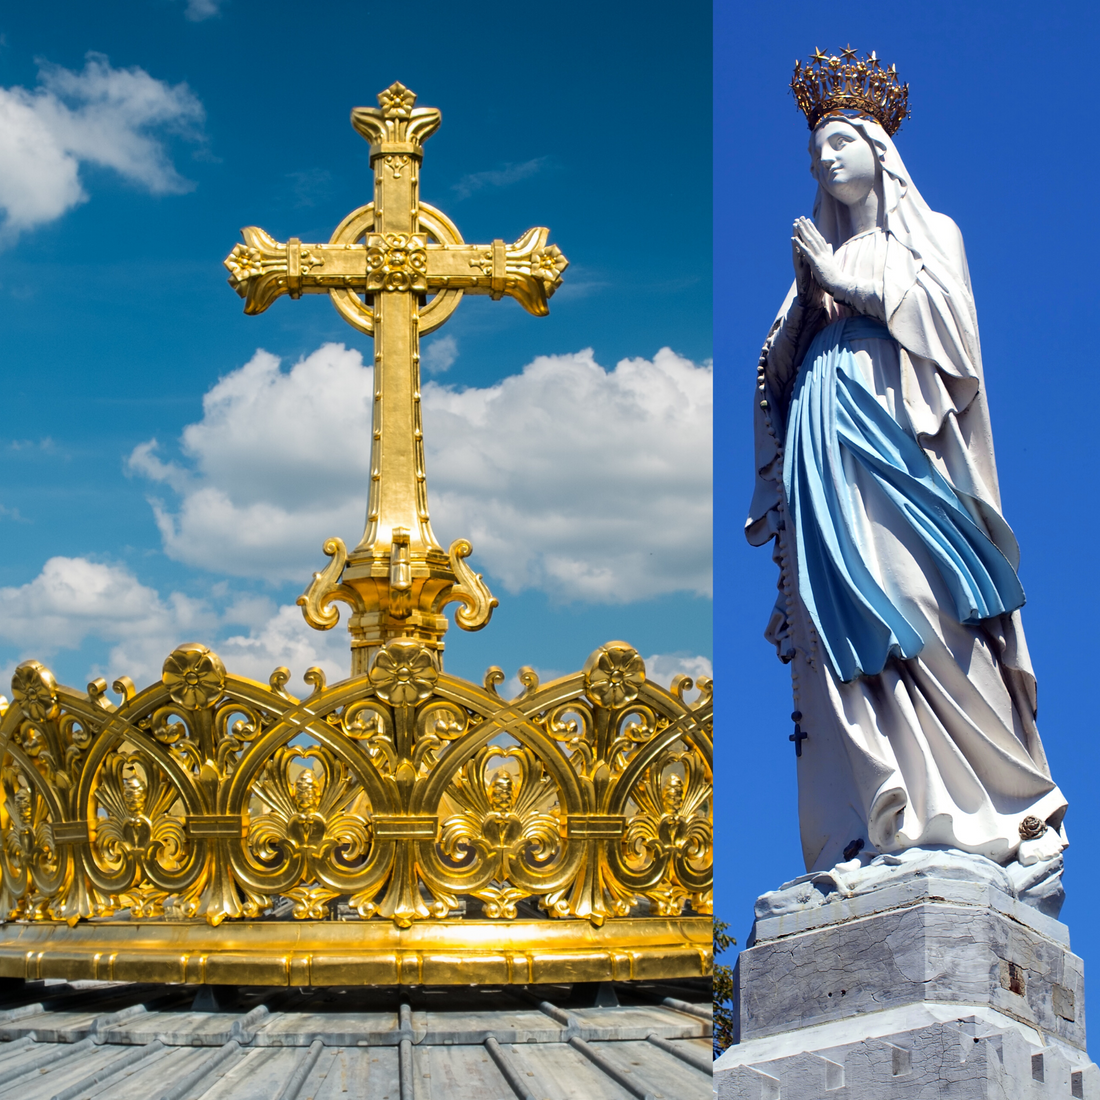 Our Lady of Lourdes and Saint Bernadette